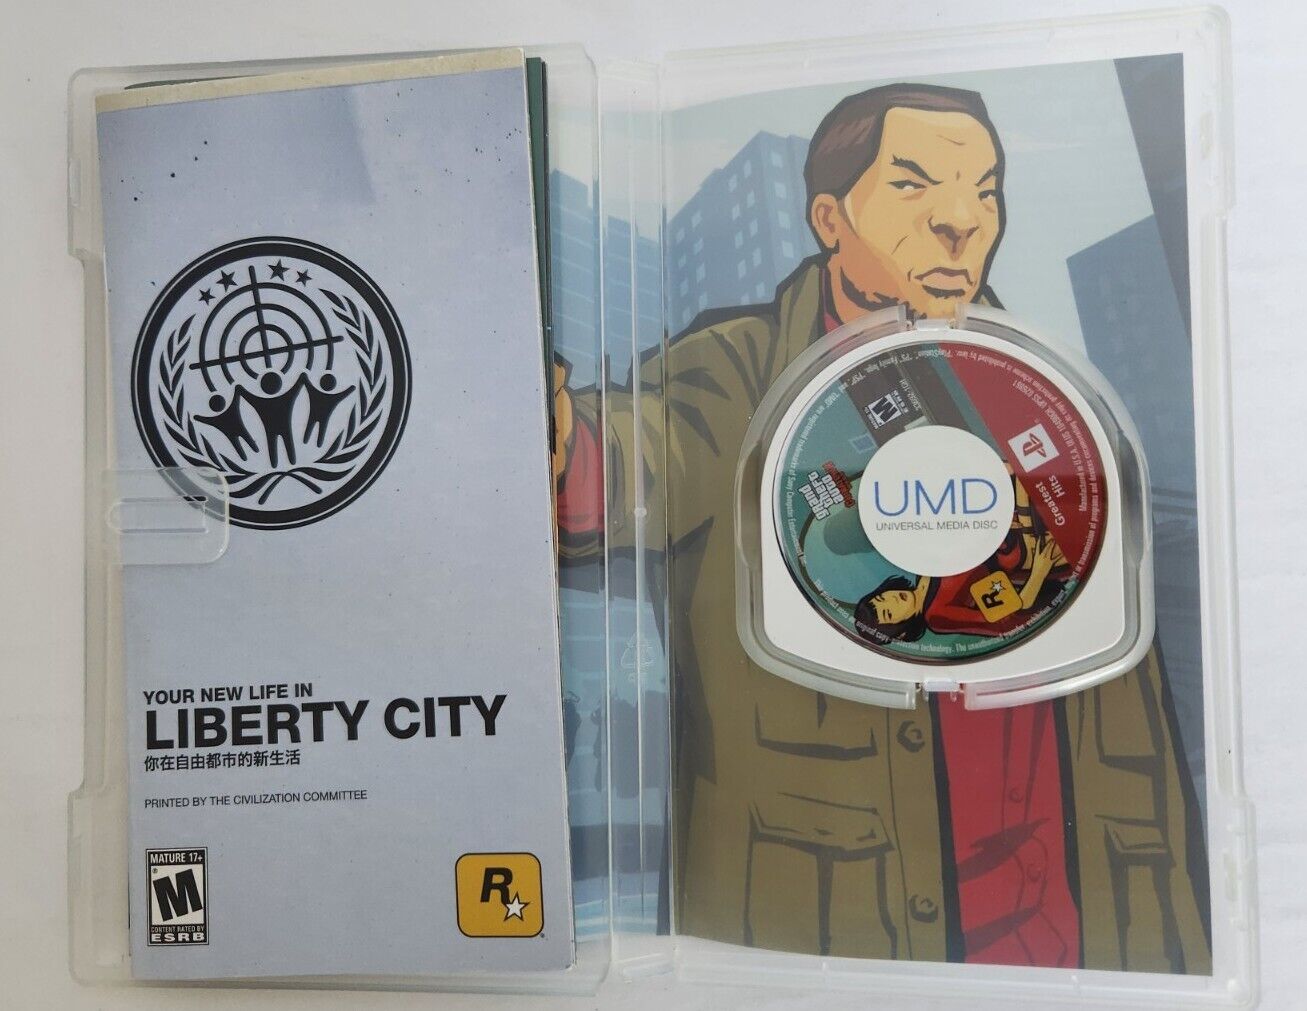 GTA Grand Theft Auto: Chinatown Wars -Sony Playstation Portable PSP -CIB- Tested